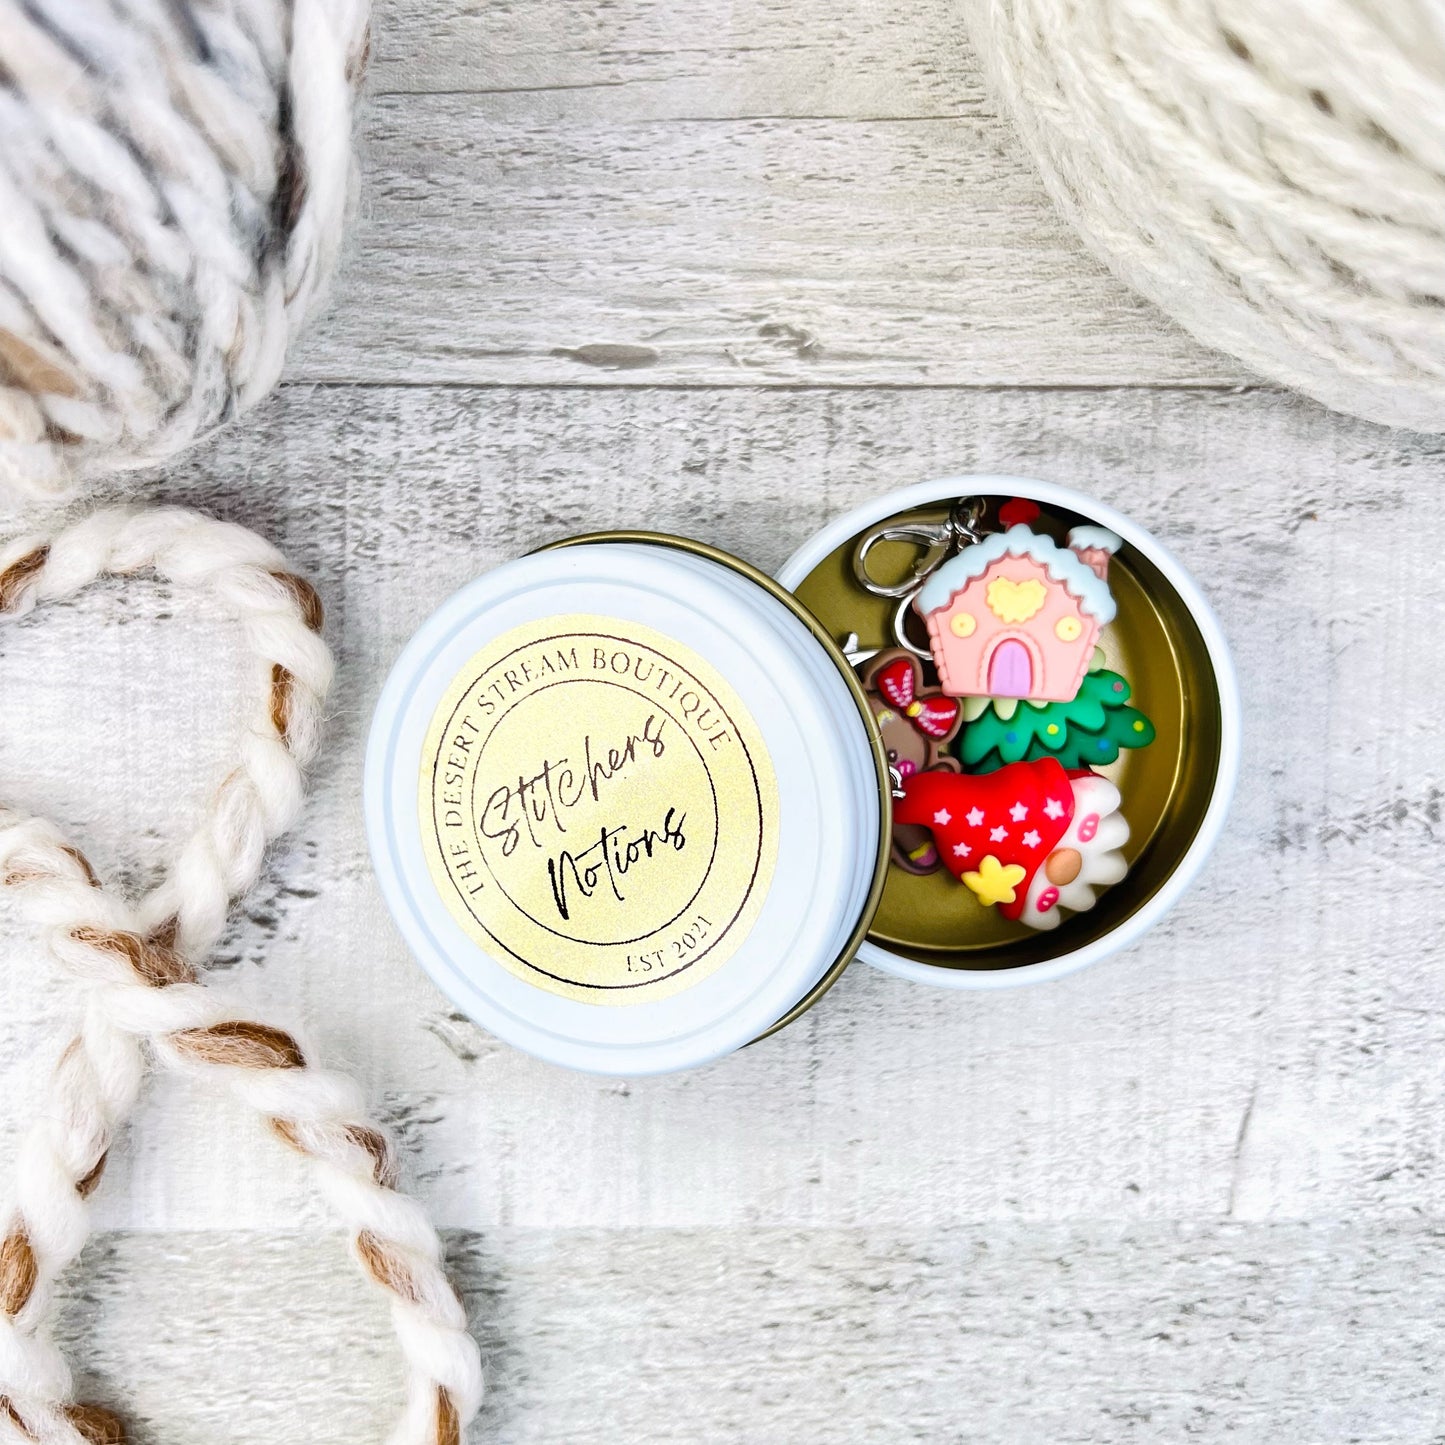 Pastel Christmas Cottage Stitch Markers Set - Knitting and Crochet